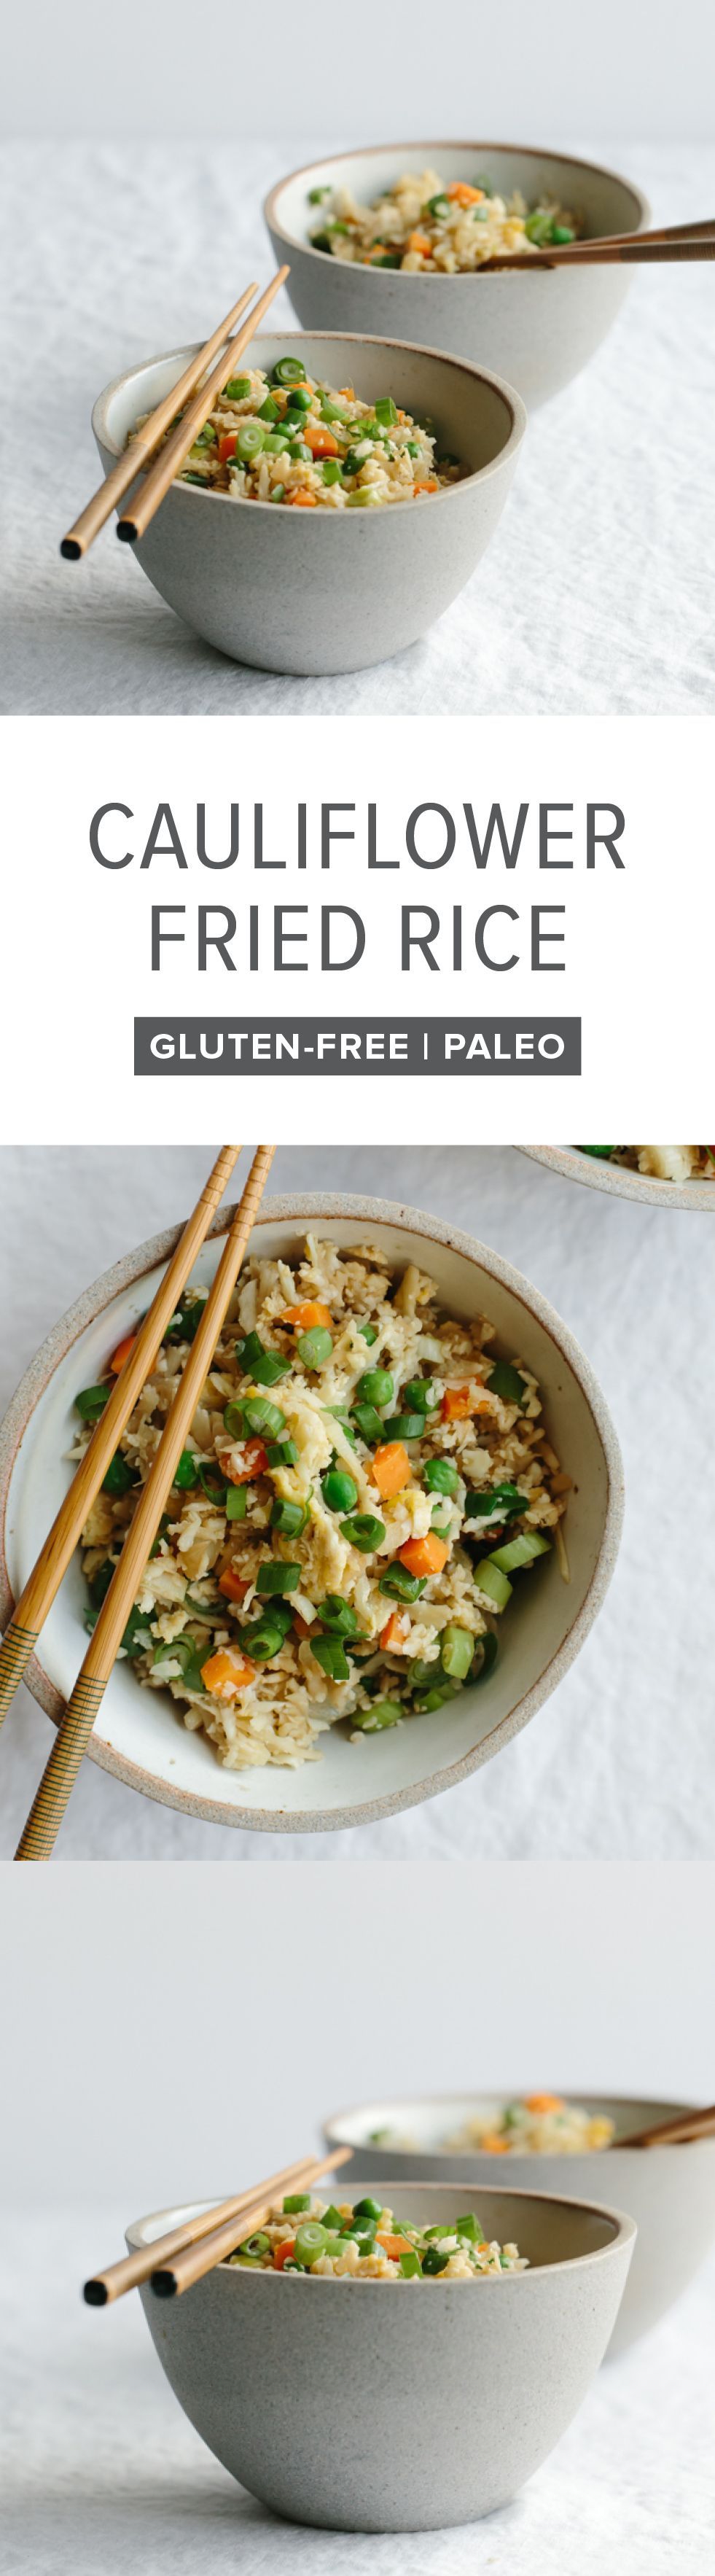 (gluten-free, paleo) Cauliflower fried rice is a healthier alternative to the much loved Chinese stir fry favorite.